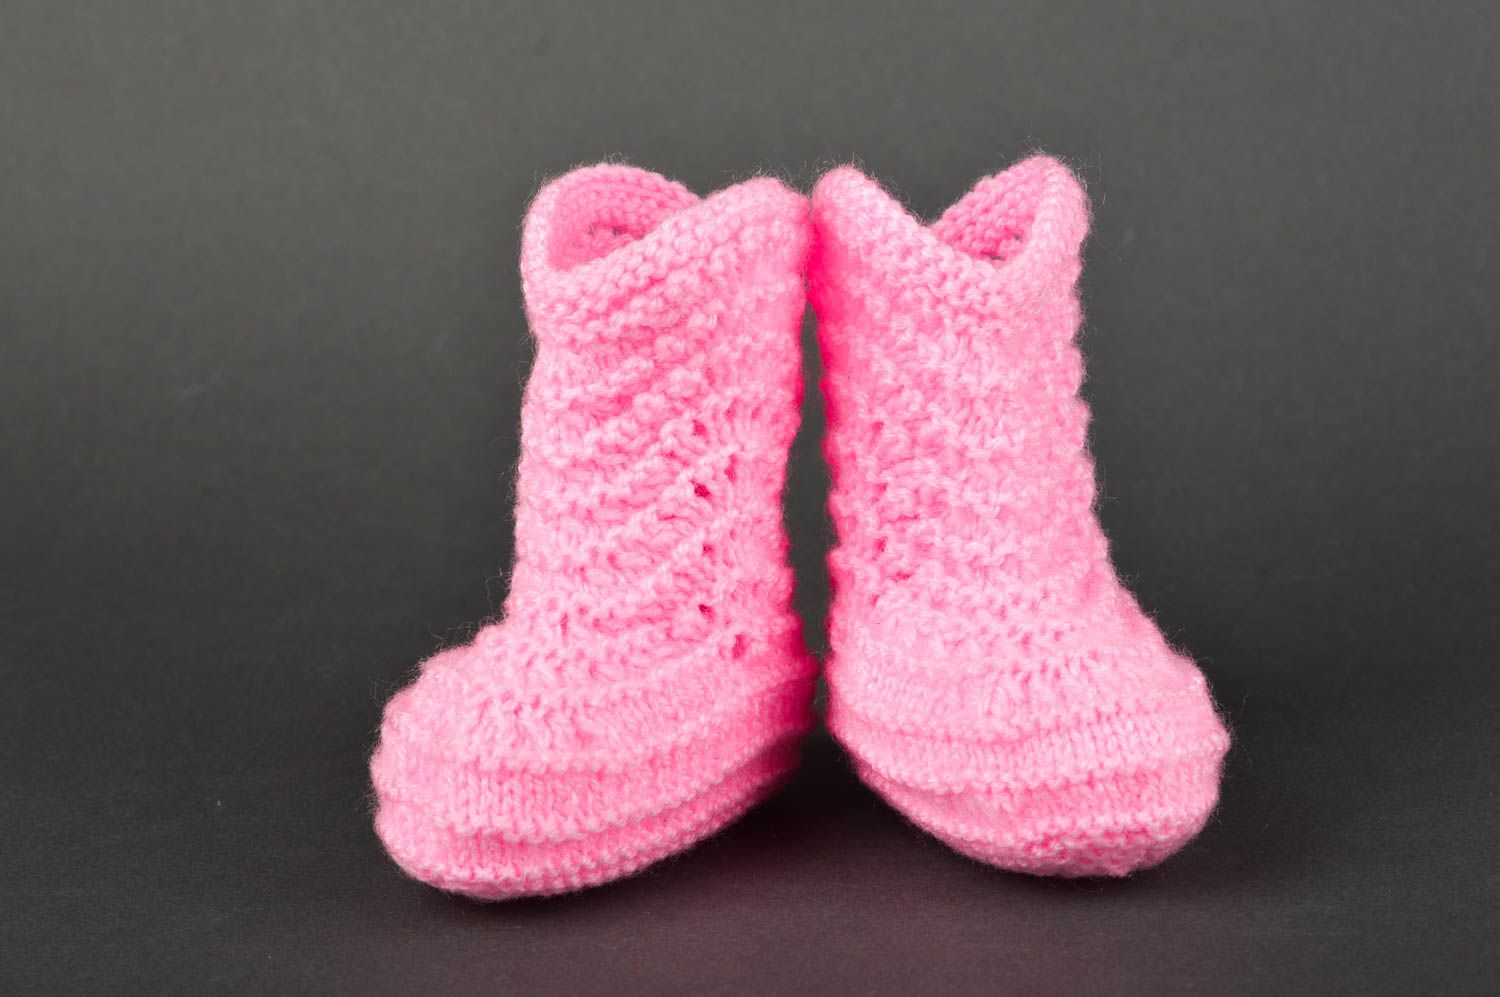 Beautiful handmade crochet baby booties fashion accessories for kids gift ideas photo 2